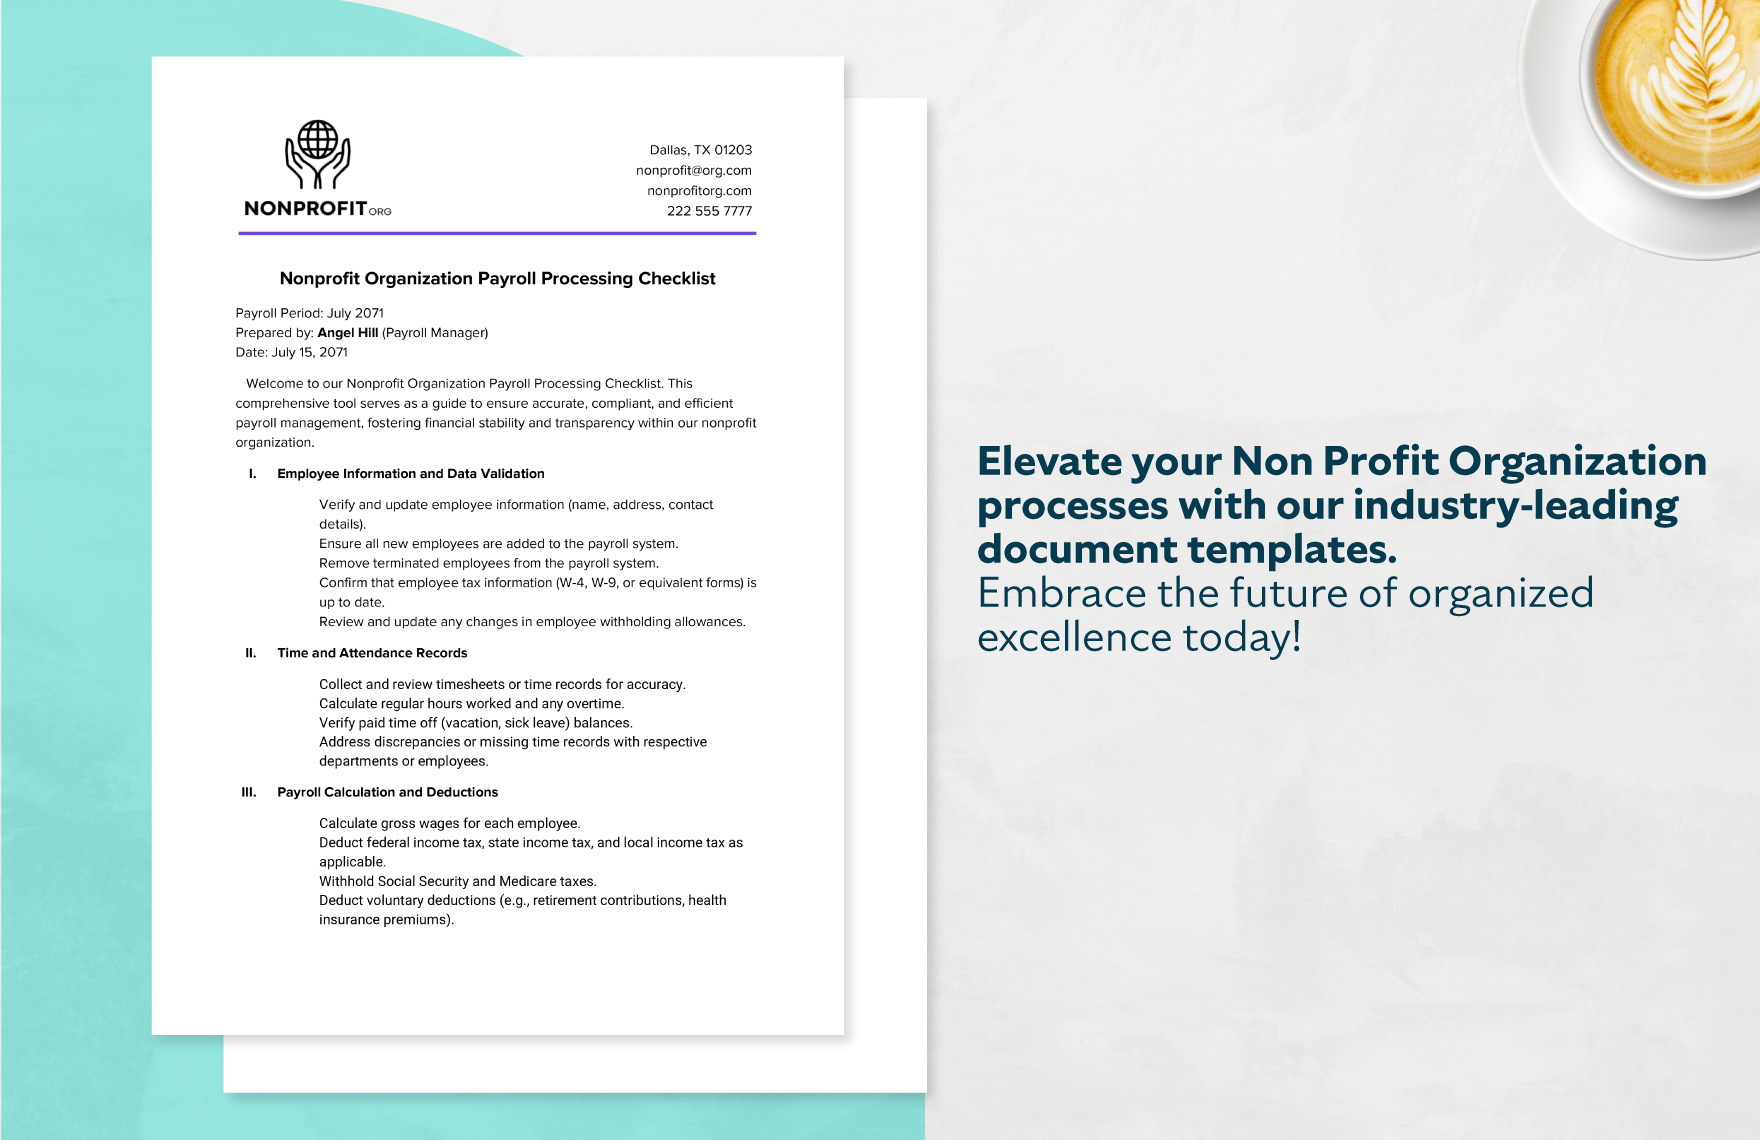 Nonprofit Organization Payroll Processing Checklist Template